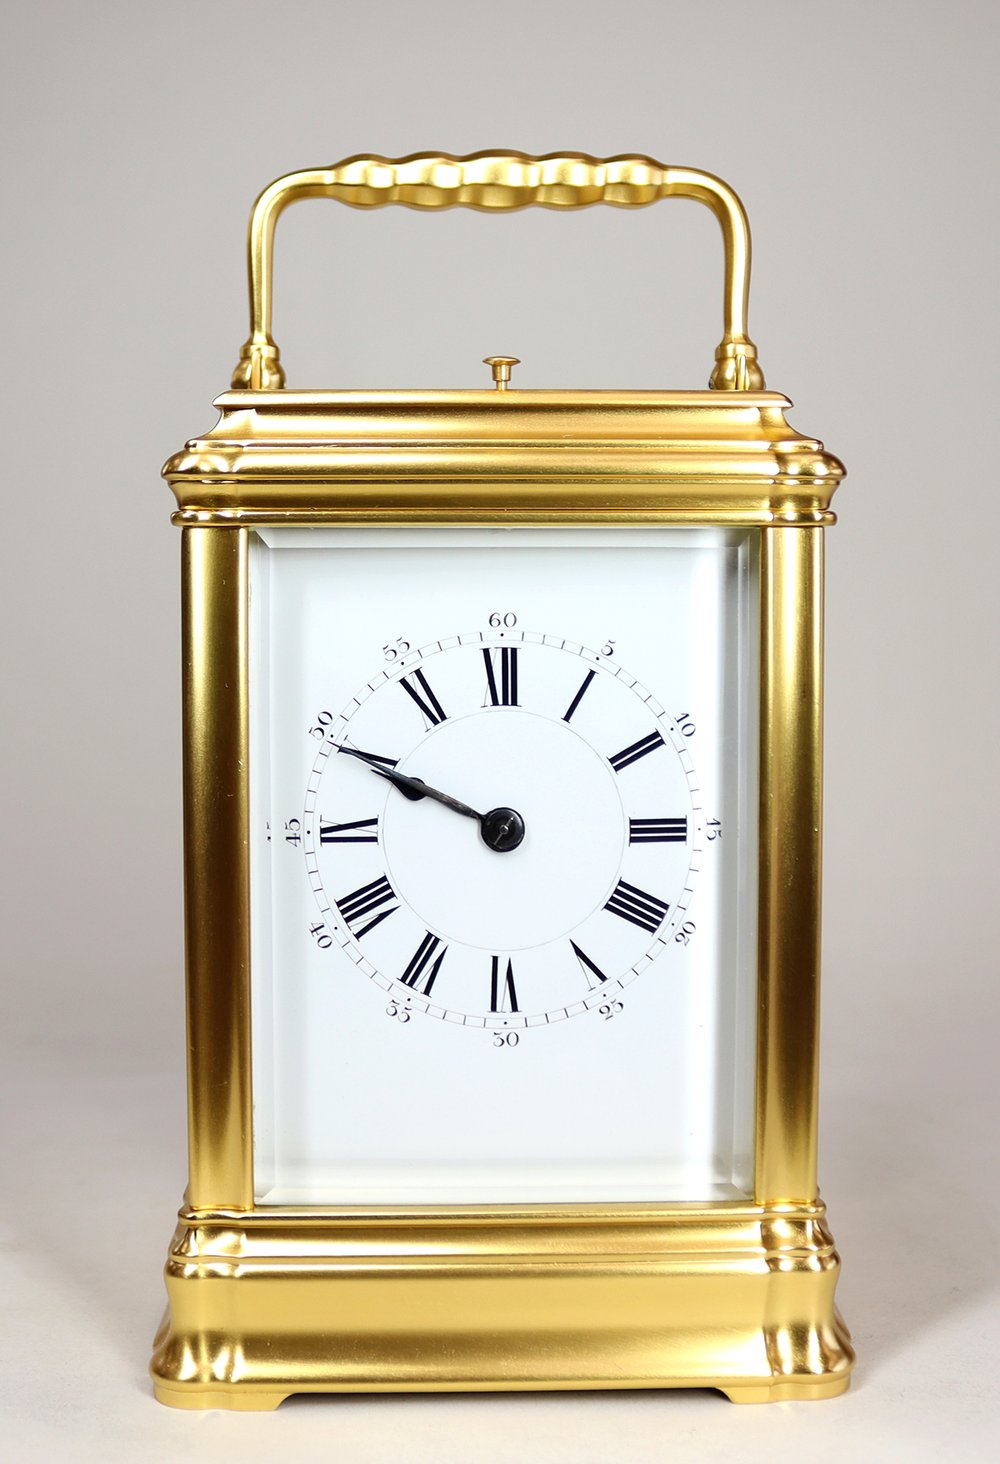 Antique Clock Makers Marks | sites.unimi.it